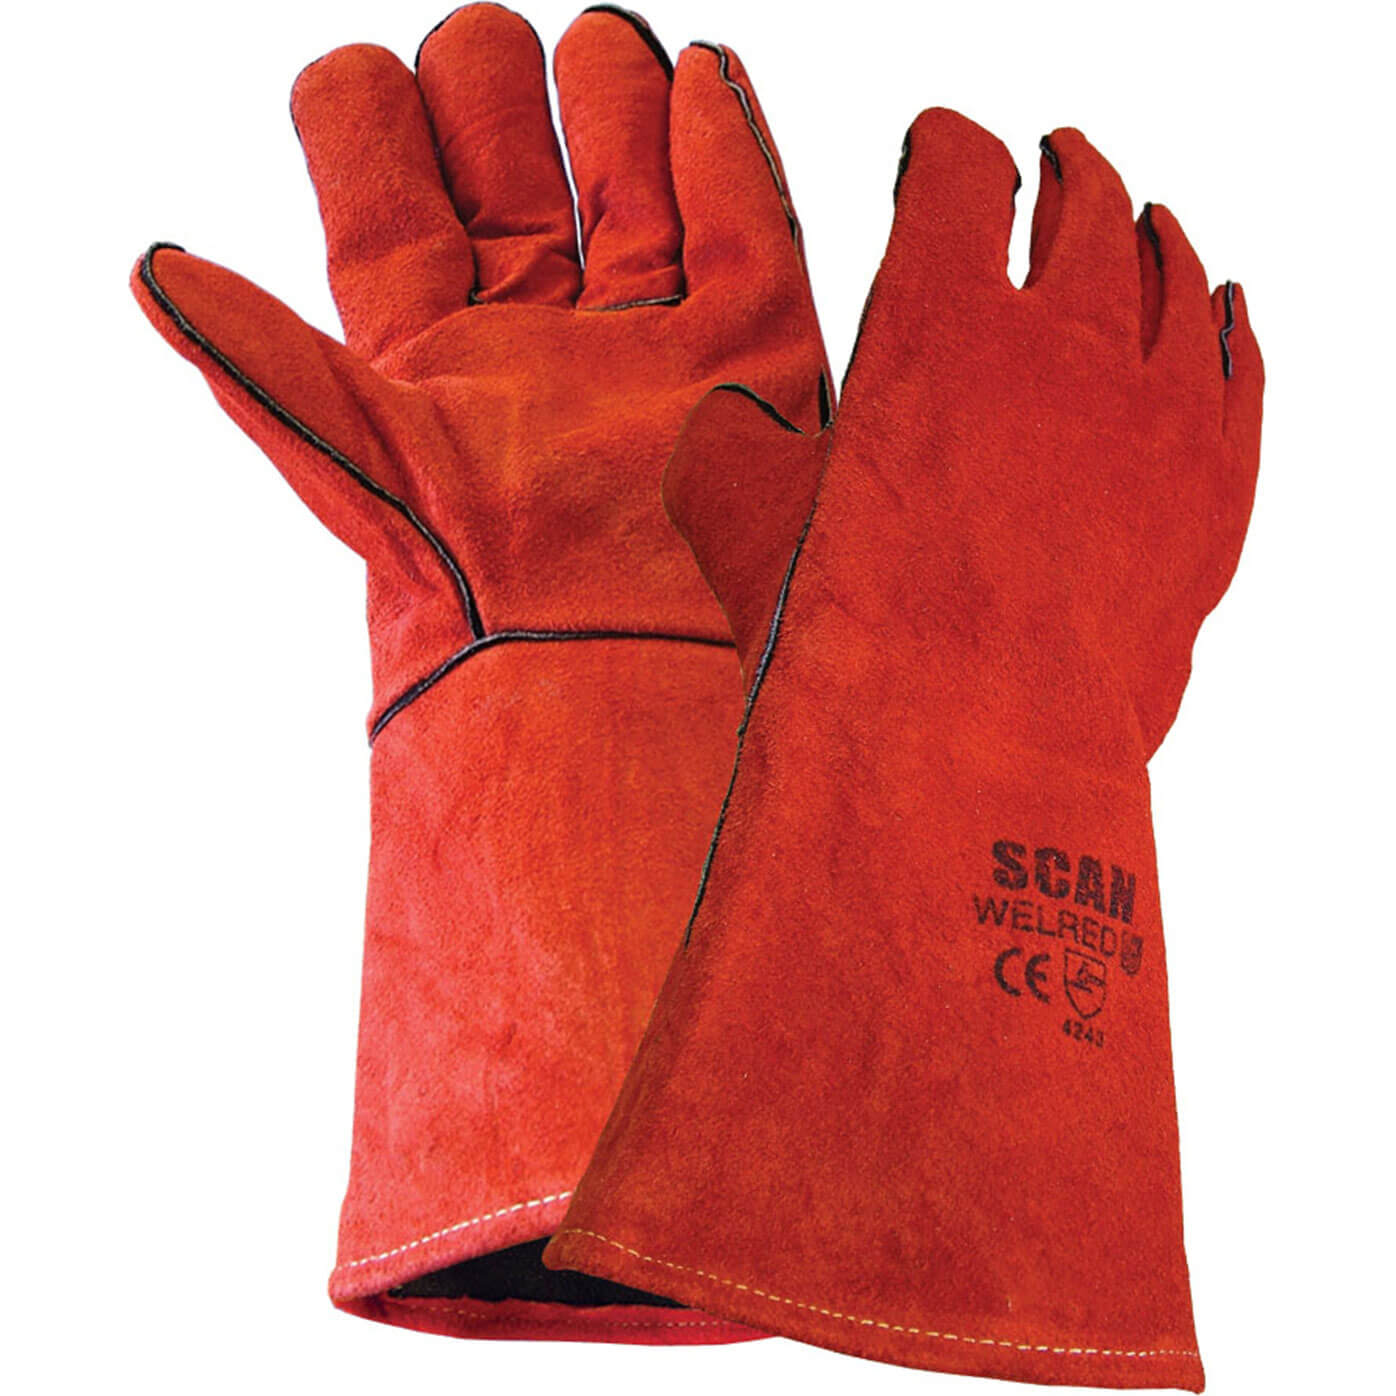 Image of Scan Welders Gauntlet Gloves Red XL